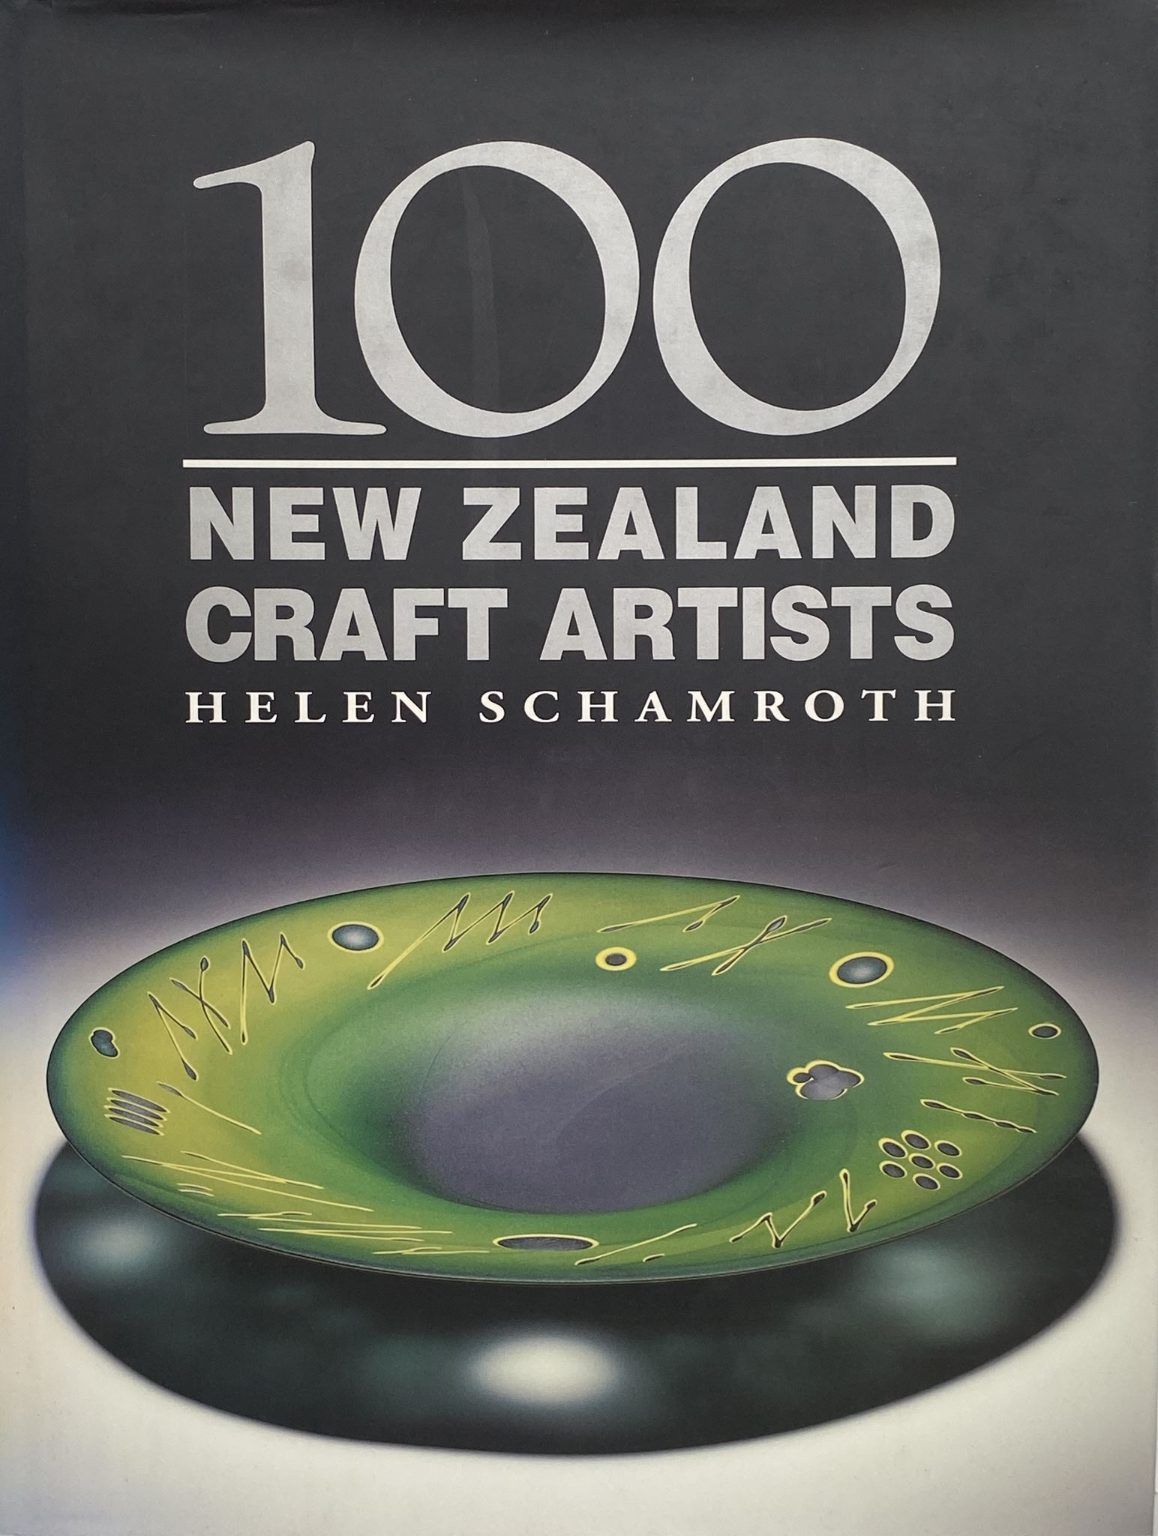 100 NEW ZEALAND CRAFT ARTISTS